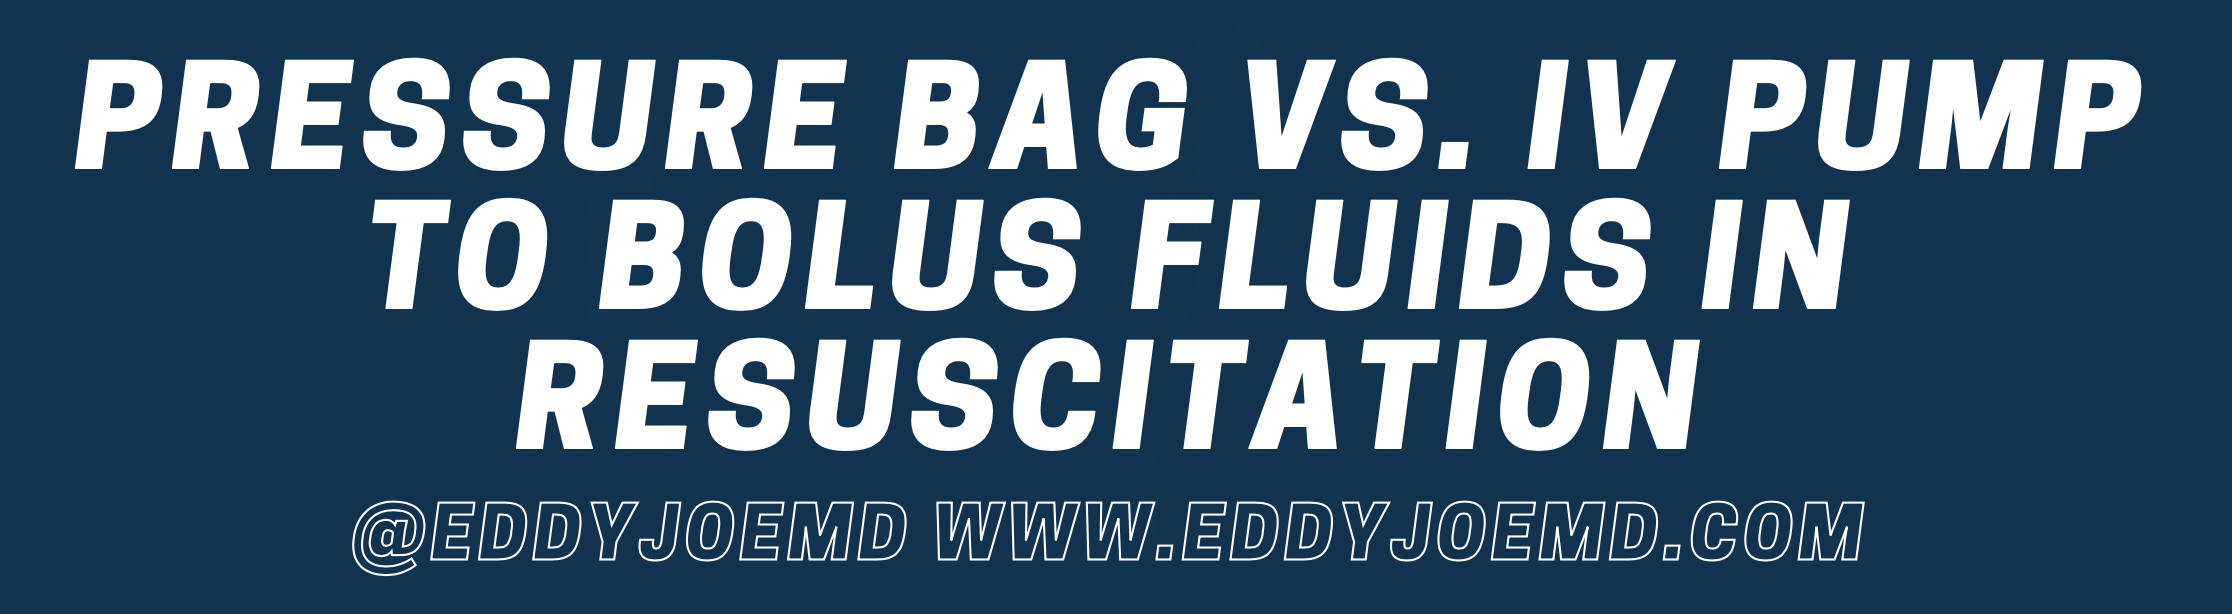 Pressure Bag vs. IV Pump to Bolus Fluids in Resuscitation